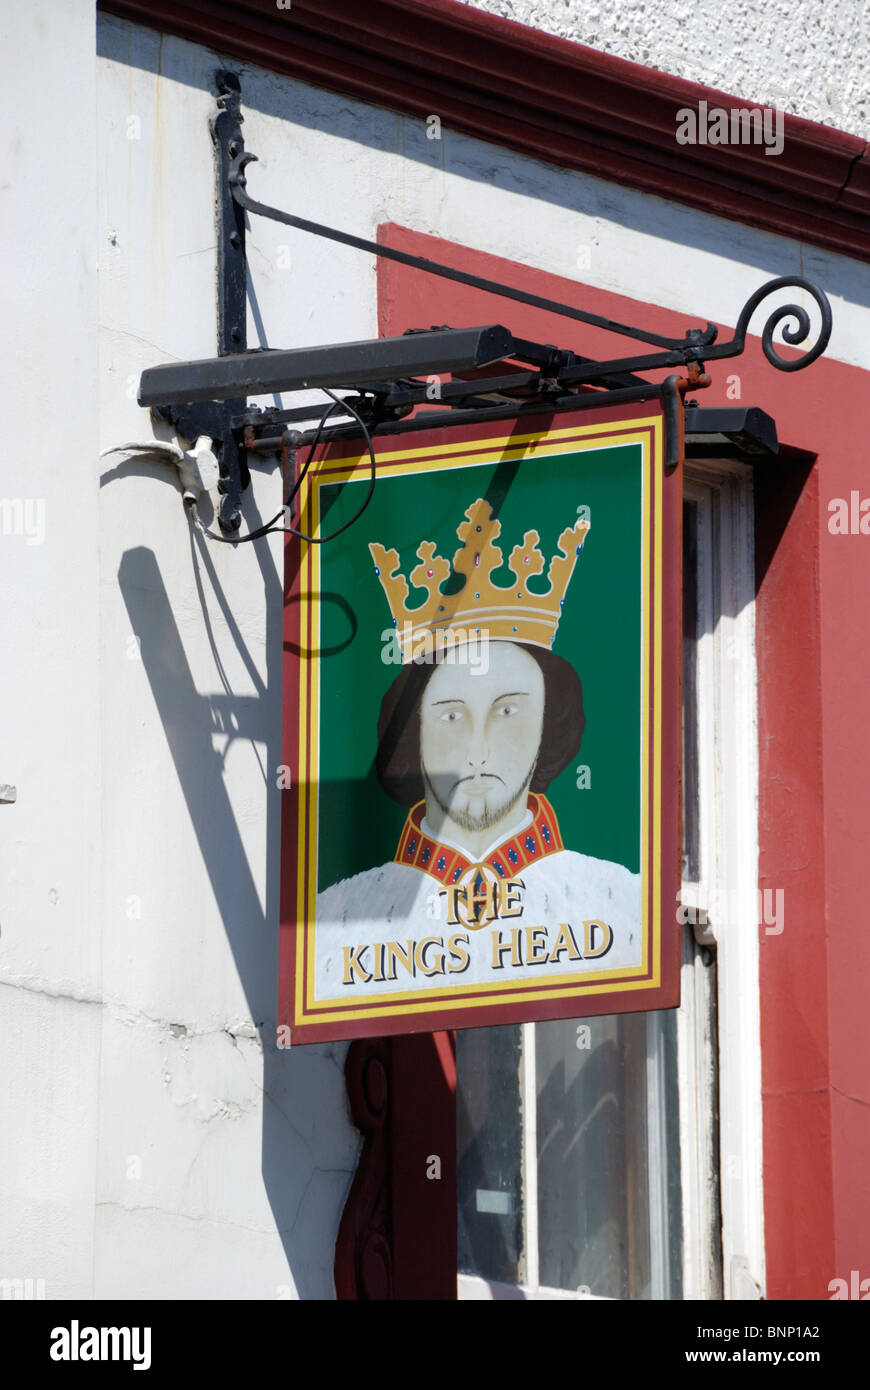 Kings Head pub sign, Norwich, Norfolk, England Stock Photo